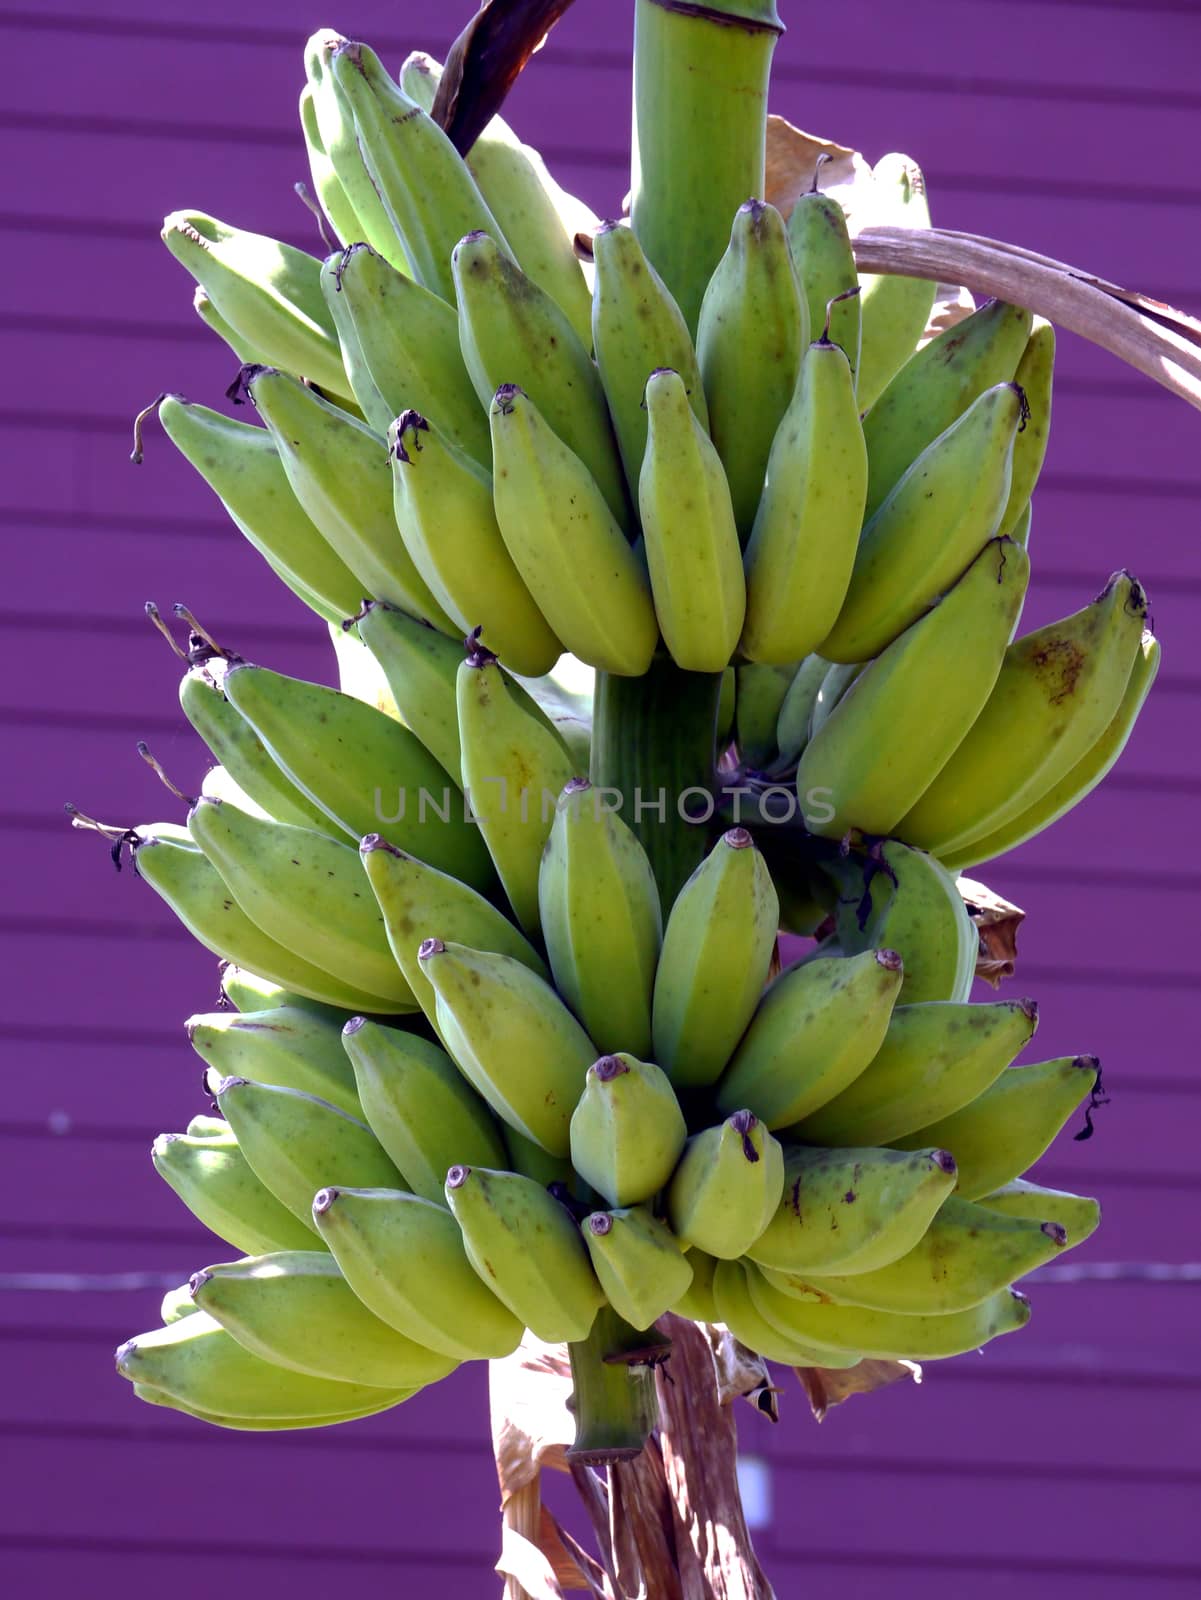 Bunch of bananas on tree